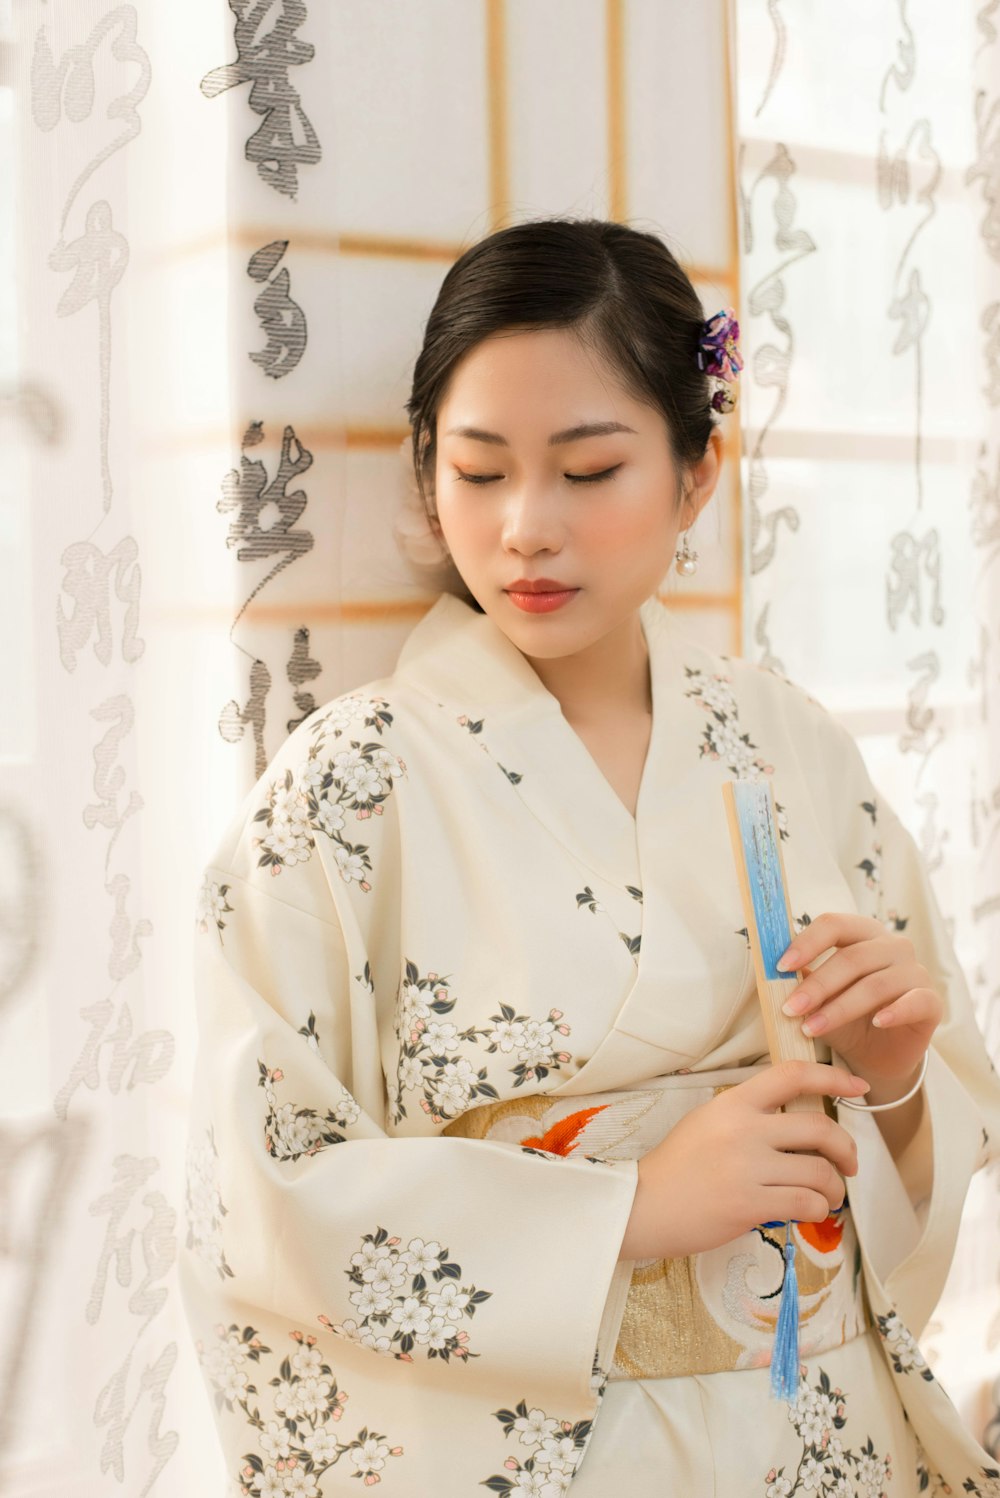 a woman in a kimono holding a comb